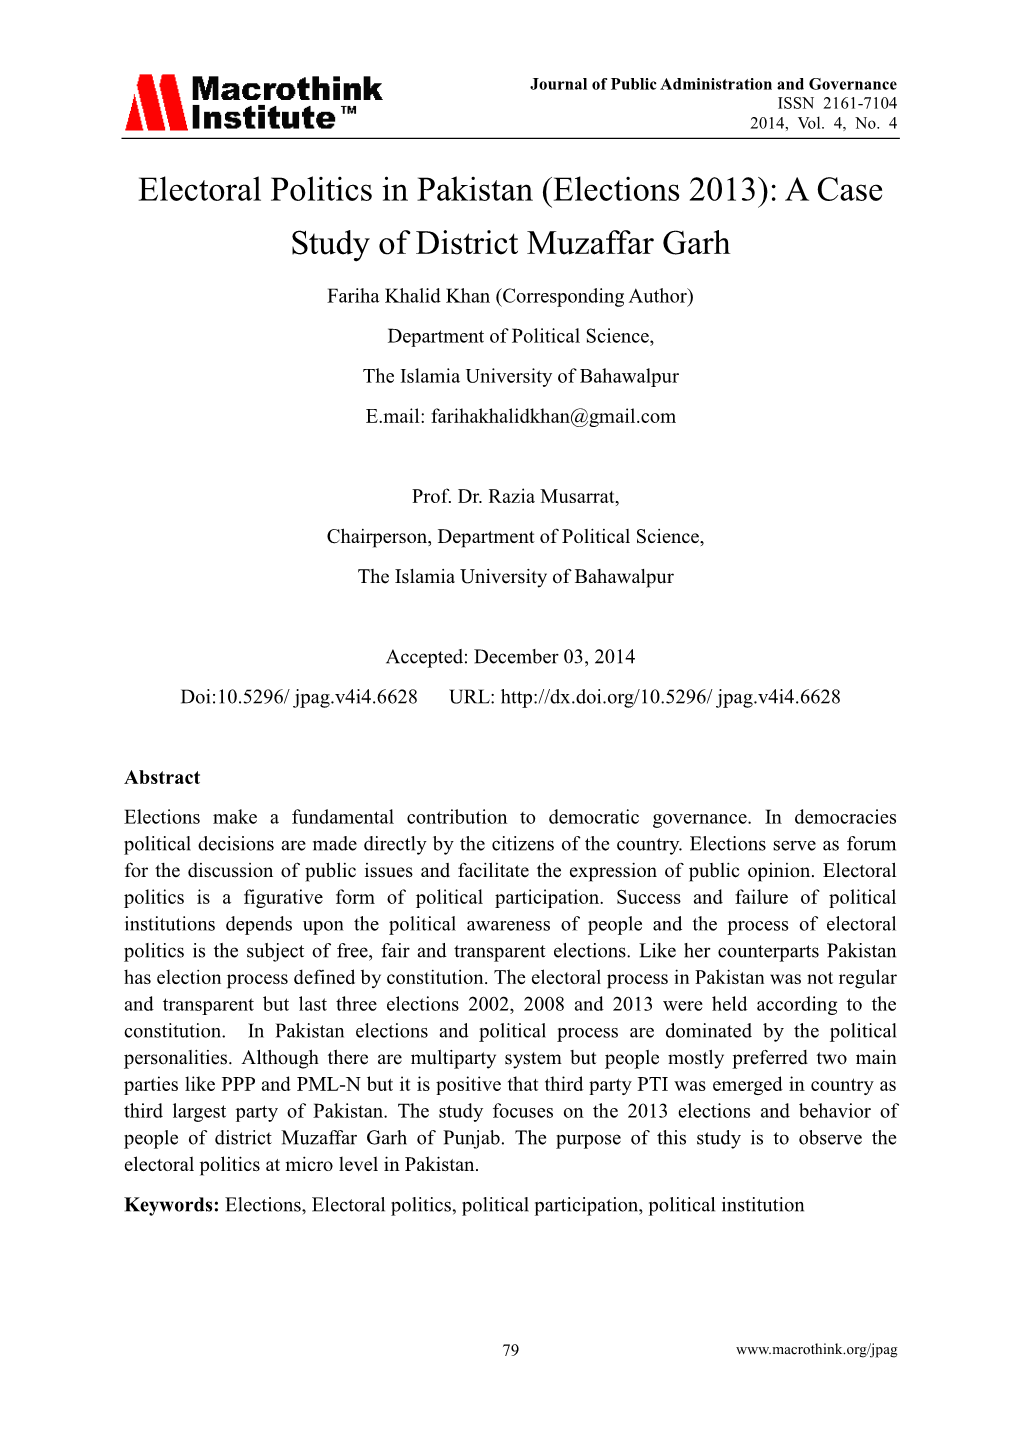 Electoral Politics in Pakistan (Elections 2013): a Case Study of District Muzaffar Garh